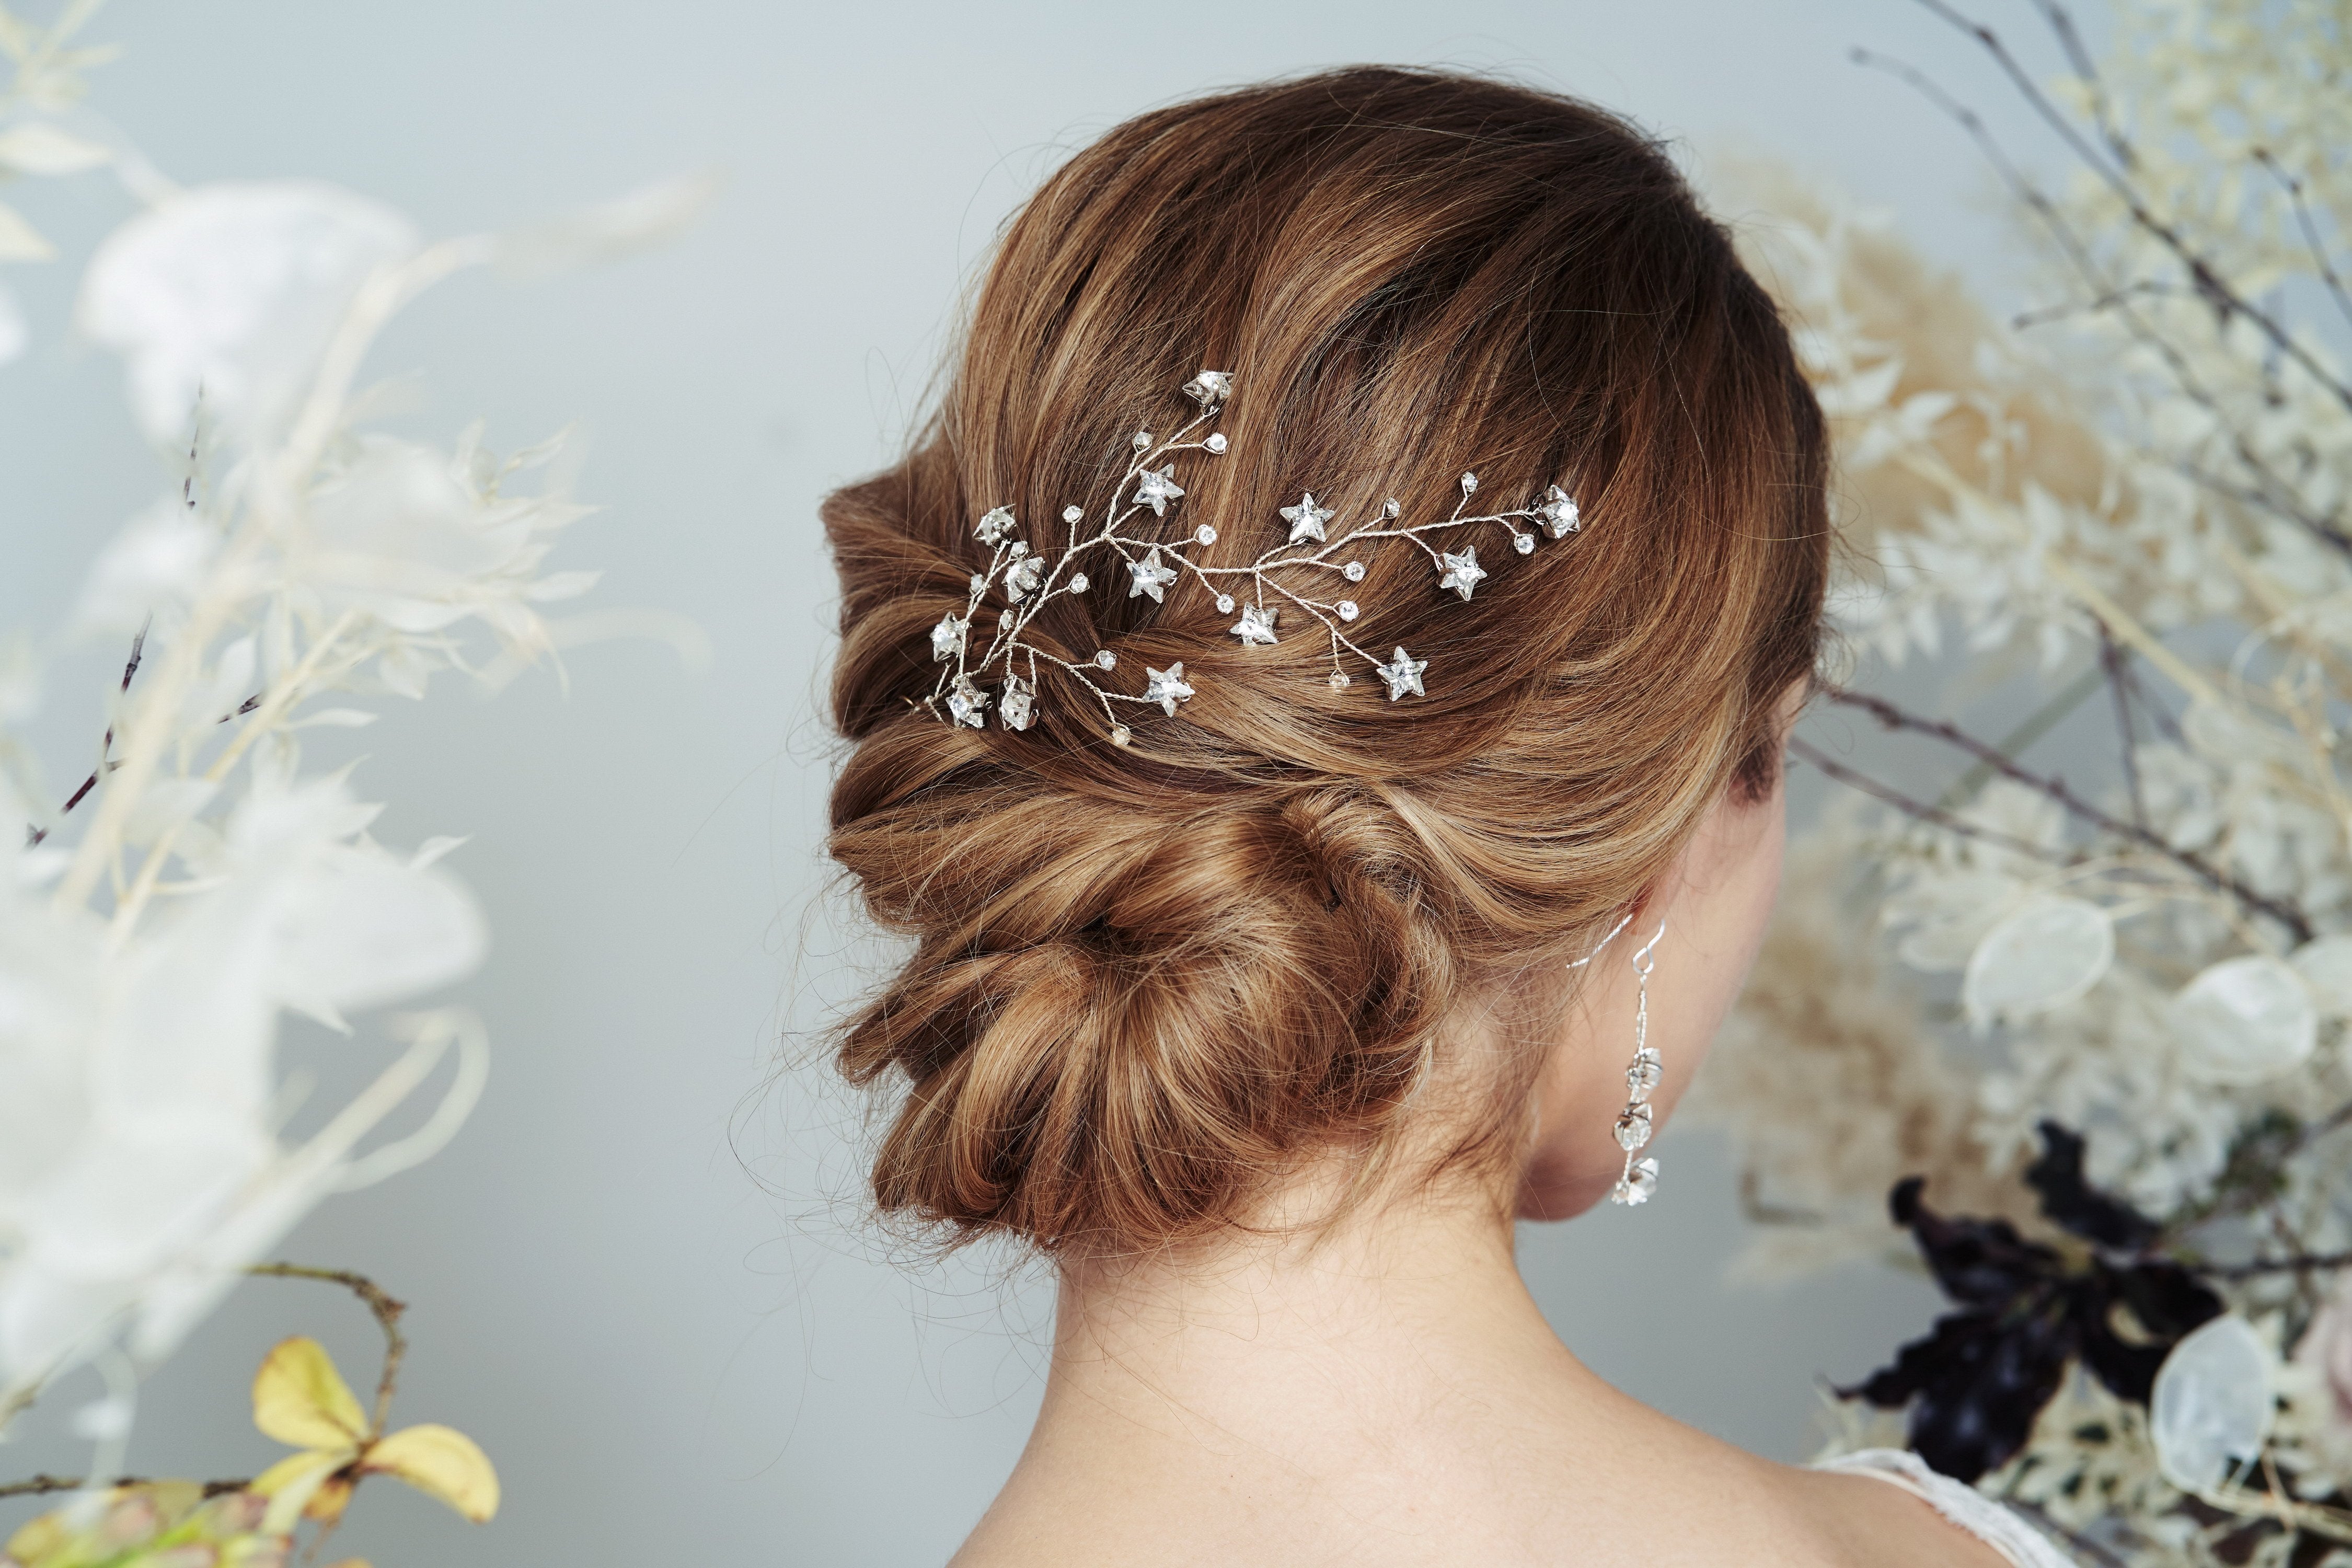 Celestial hairvine and earrings wedding jewellery set by Debbie Carlisle